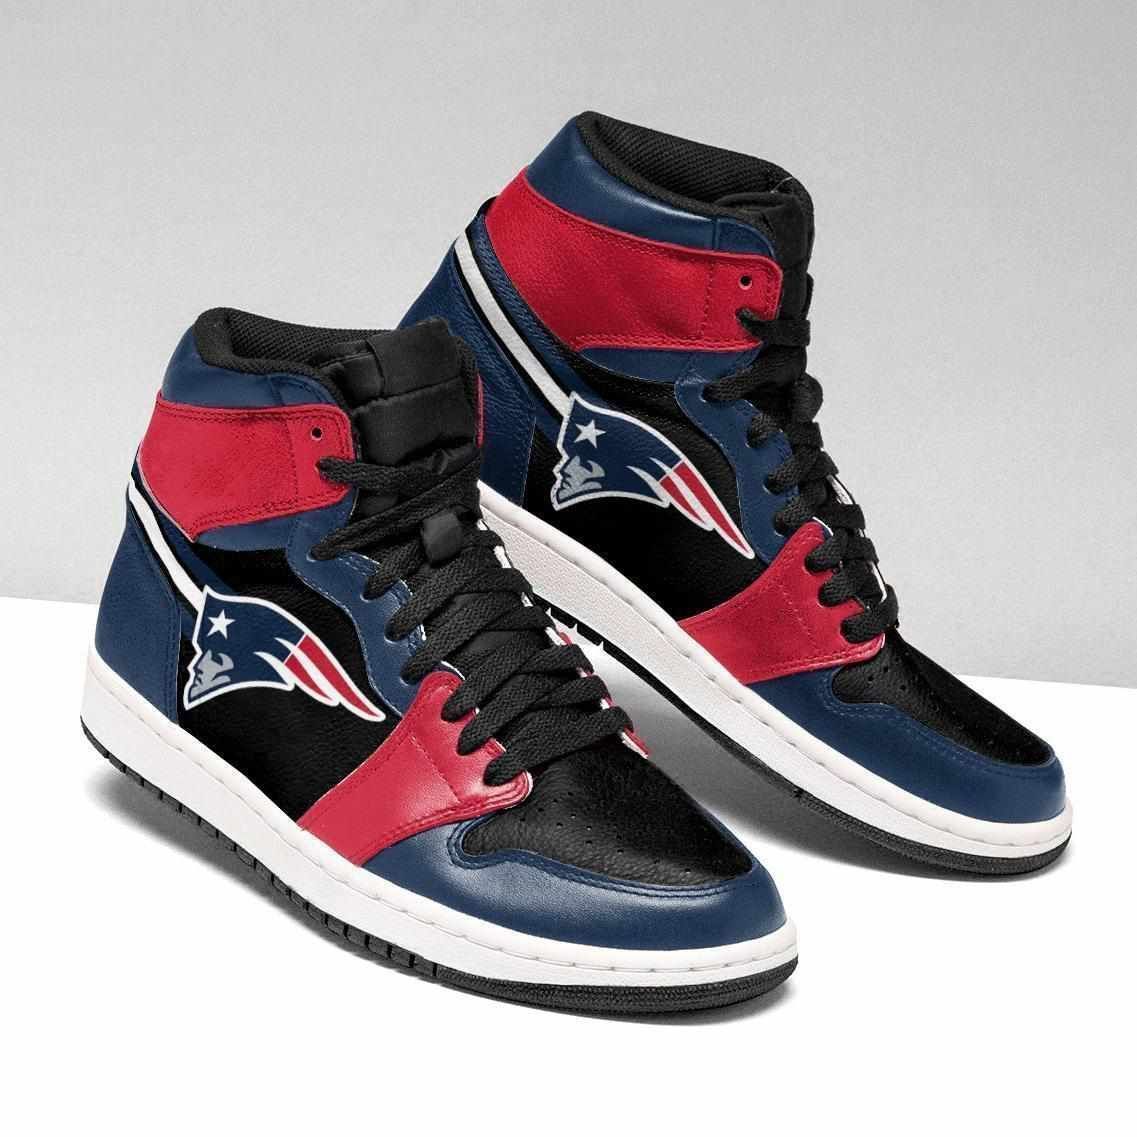 New England Patriots 2 Nfl Football Air Jordan Shoes Sport Sneakers